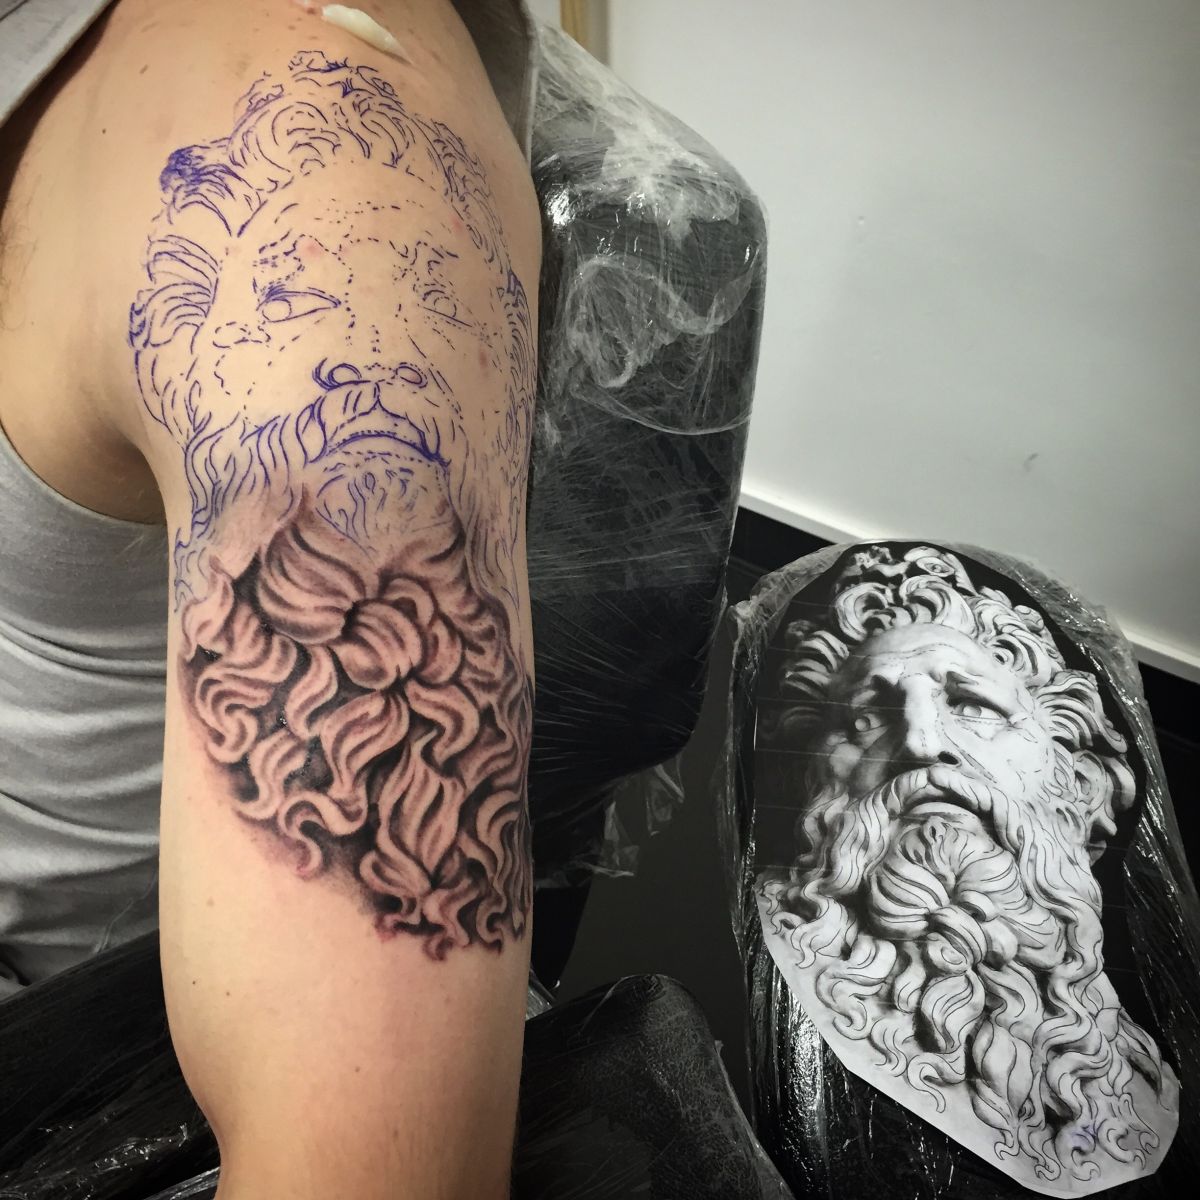 Zeus tattoo in progress